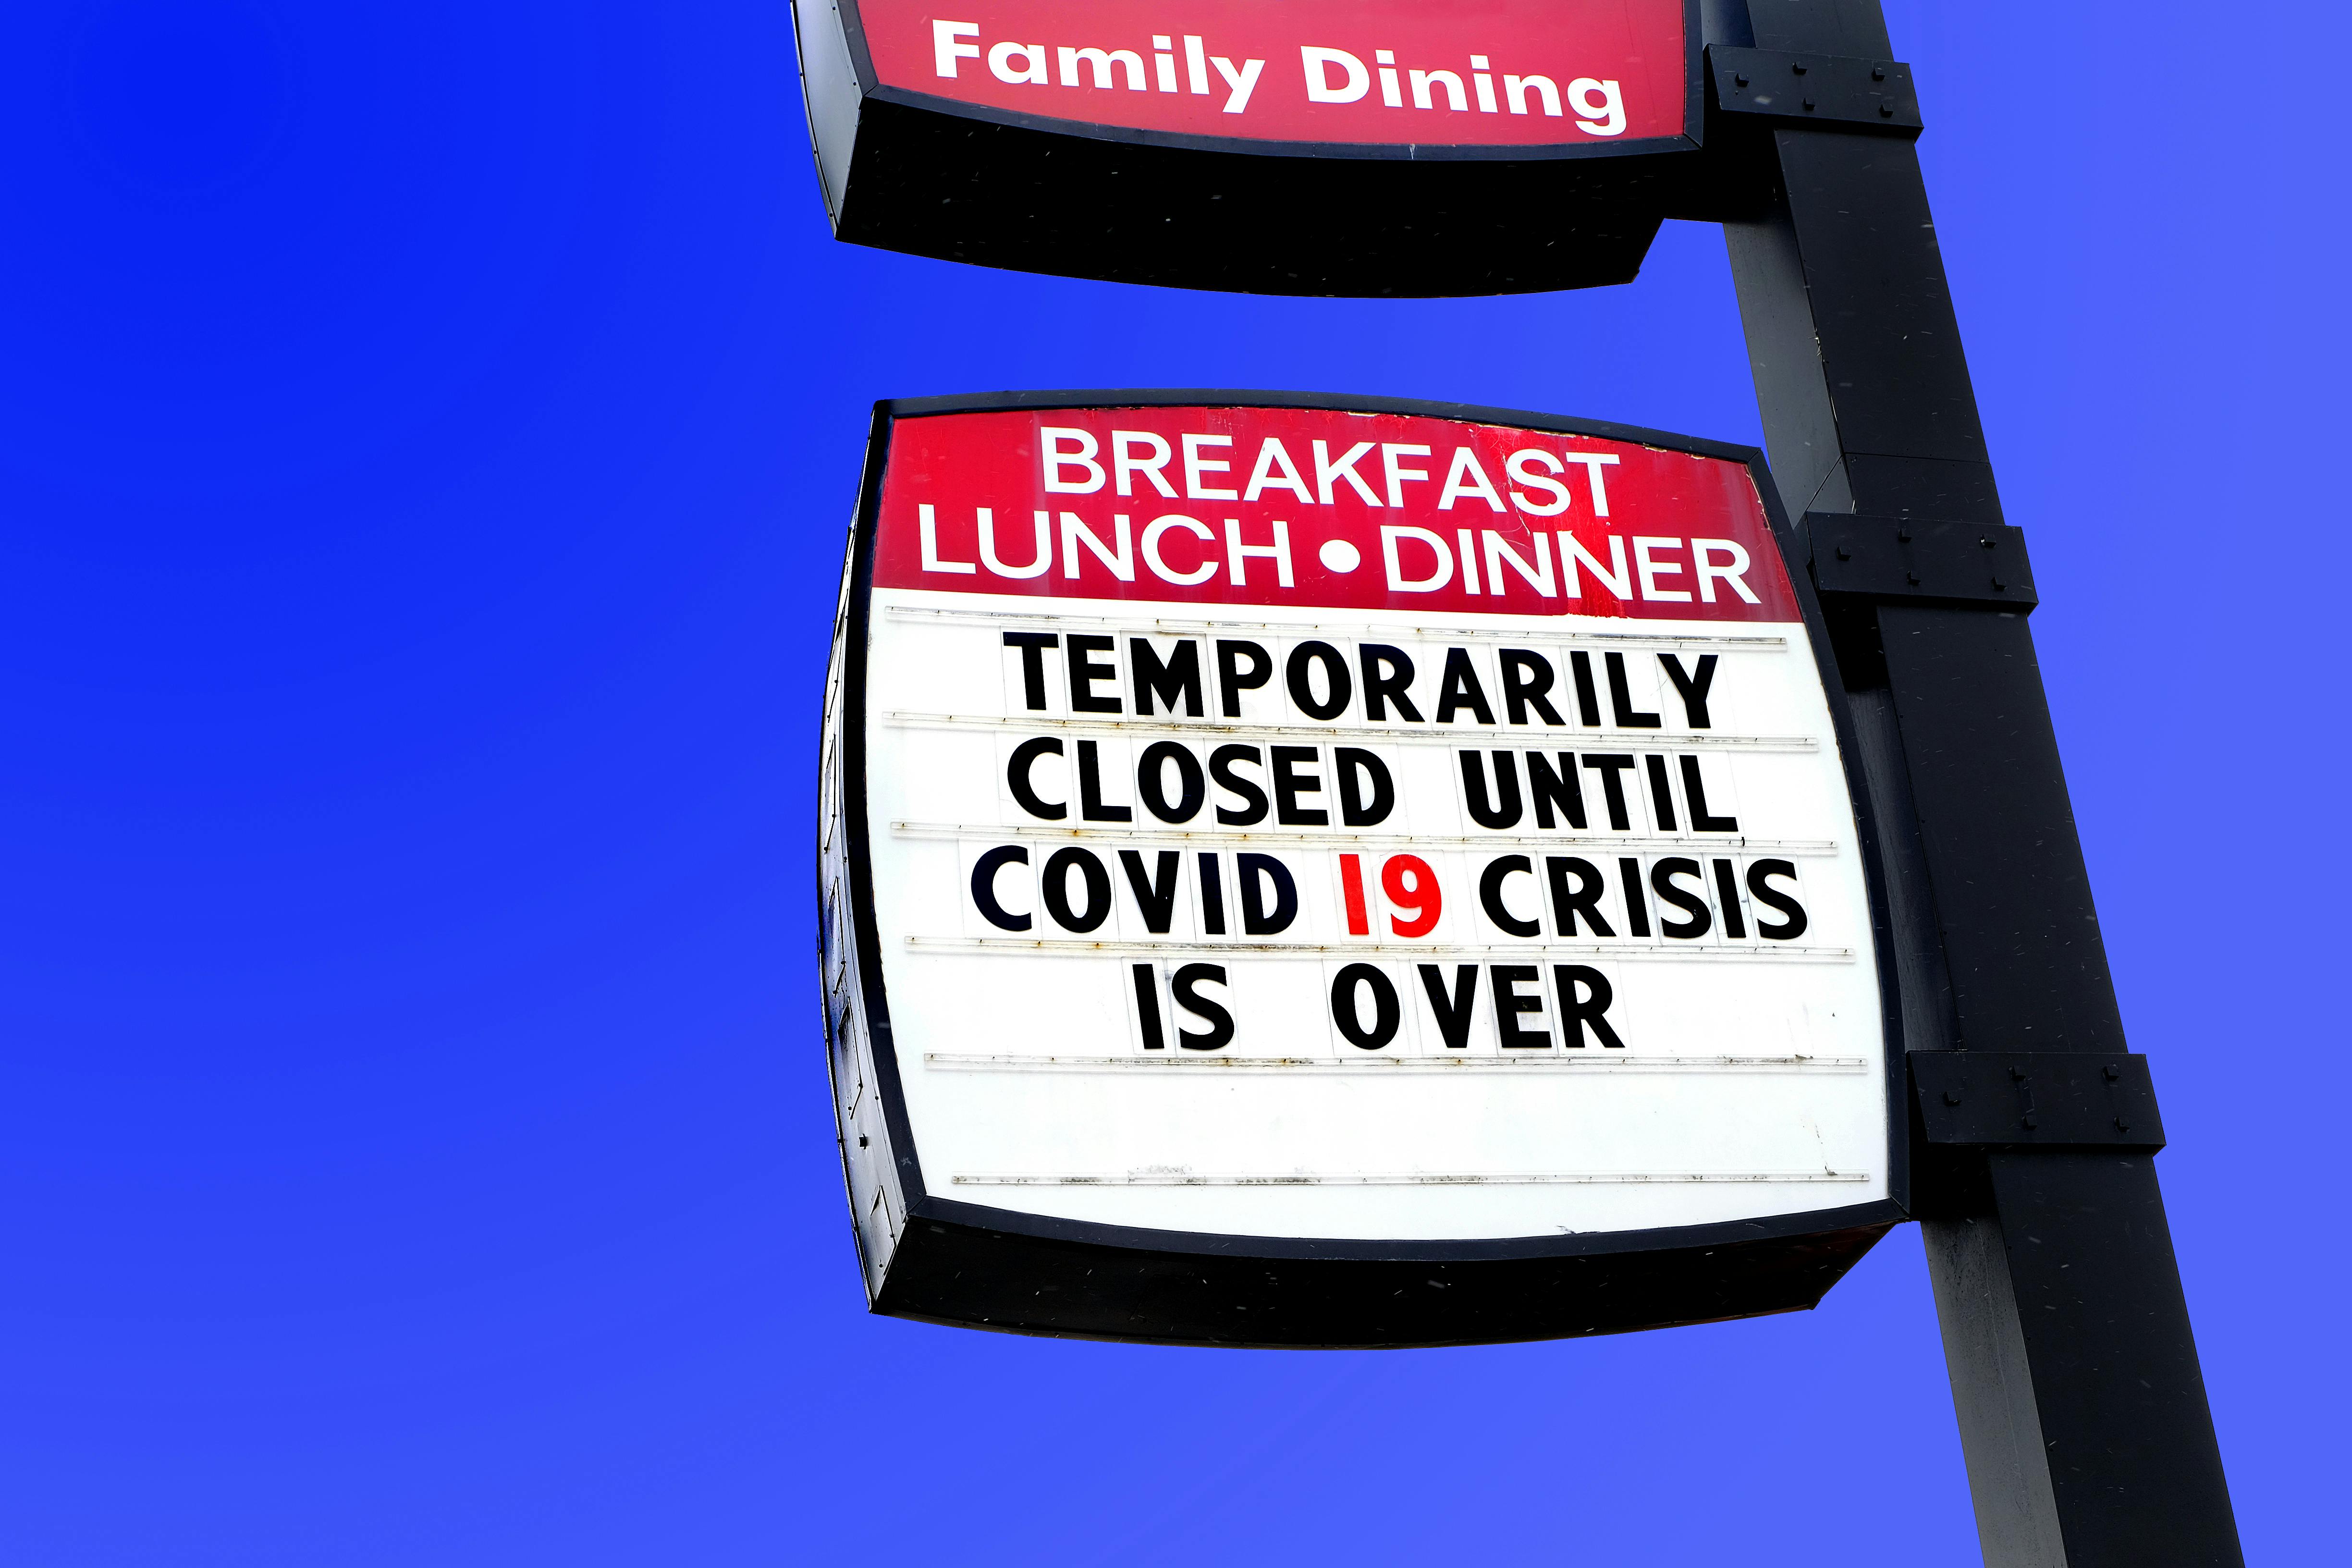 Restaurant sign announcing closure until COVID-19 passes over.